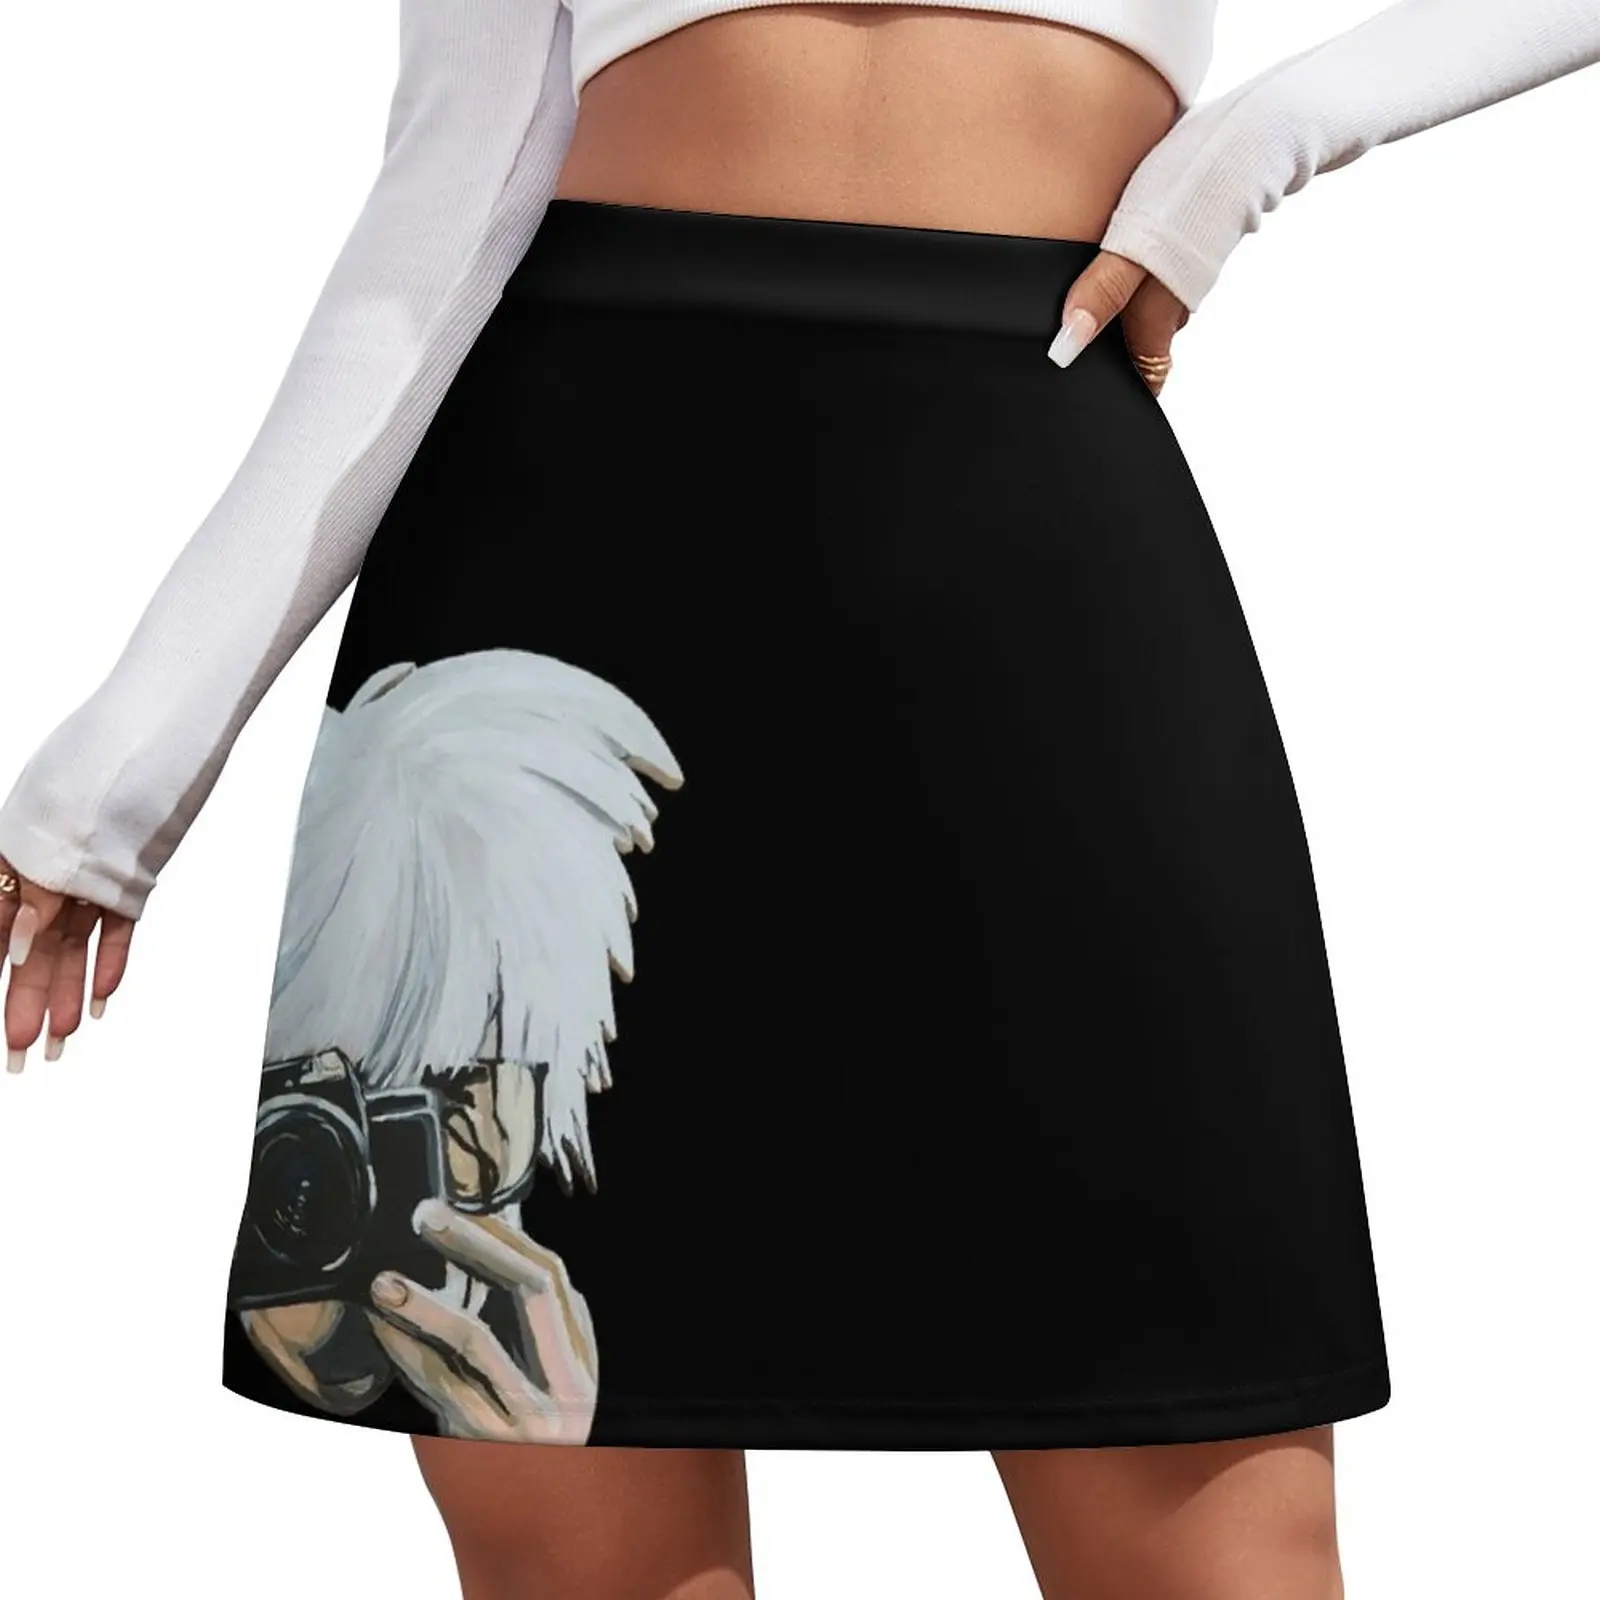 Aperture Mini Skirt extreme mini dress kawaii skirt